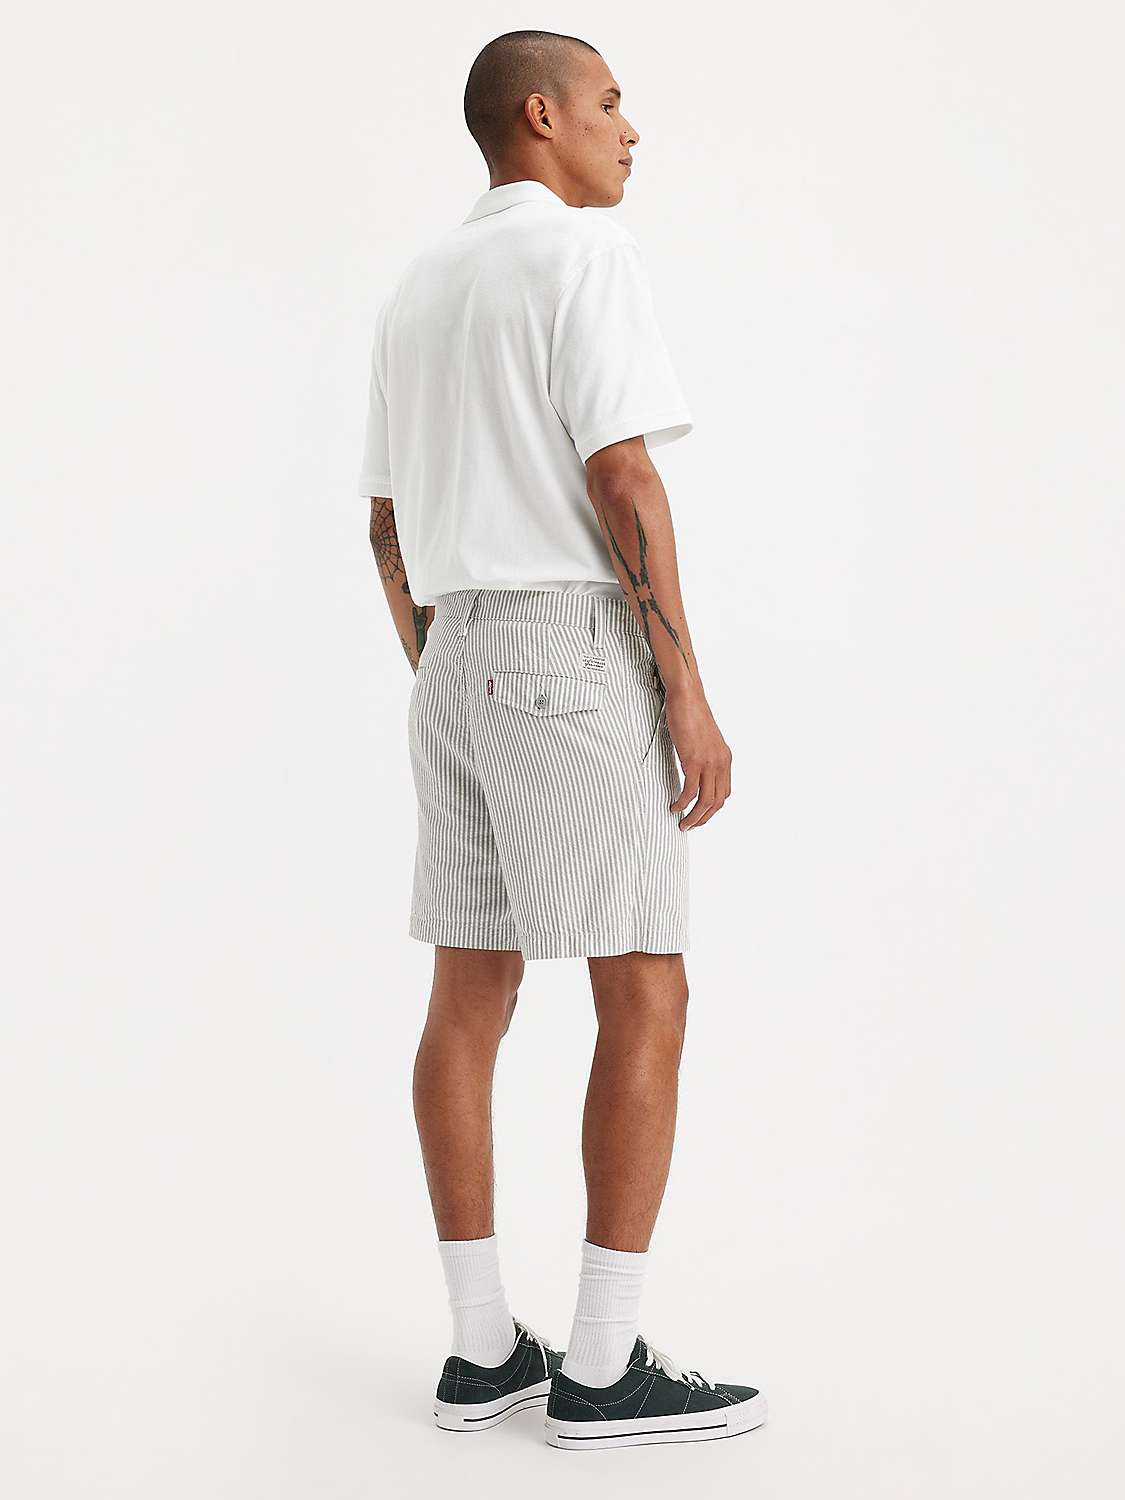 Buy Levi's XX Chino Authentic Marlon Stripe Shorts, Multi Online at johnlewis.com